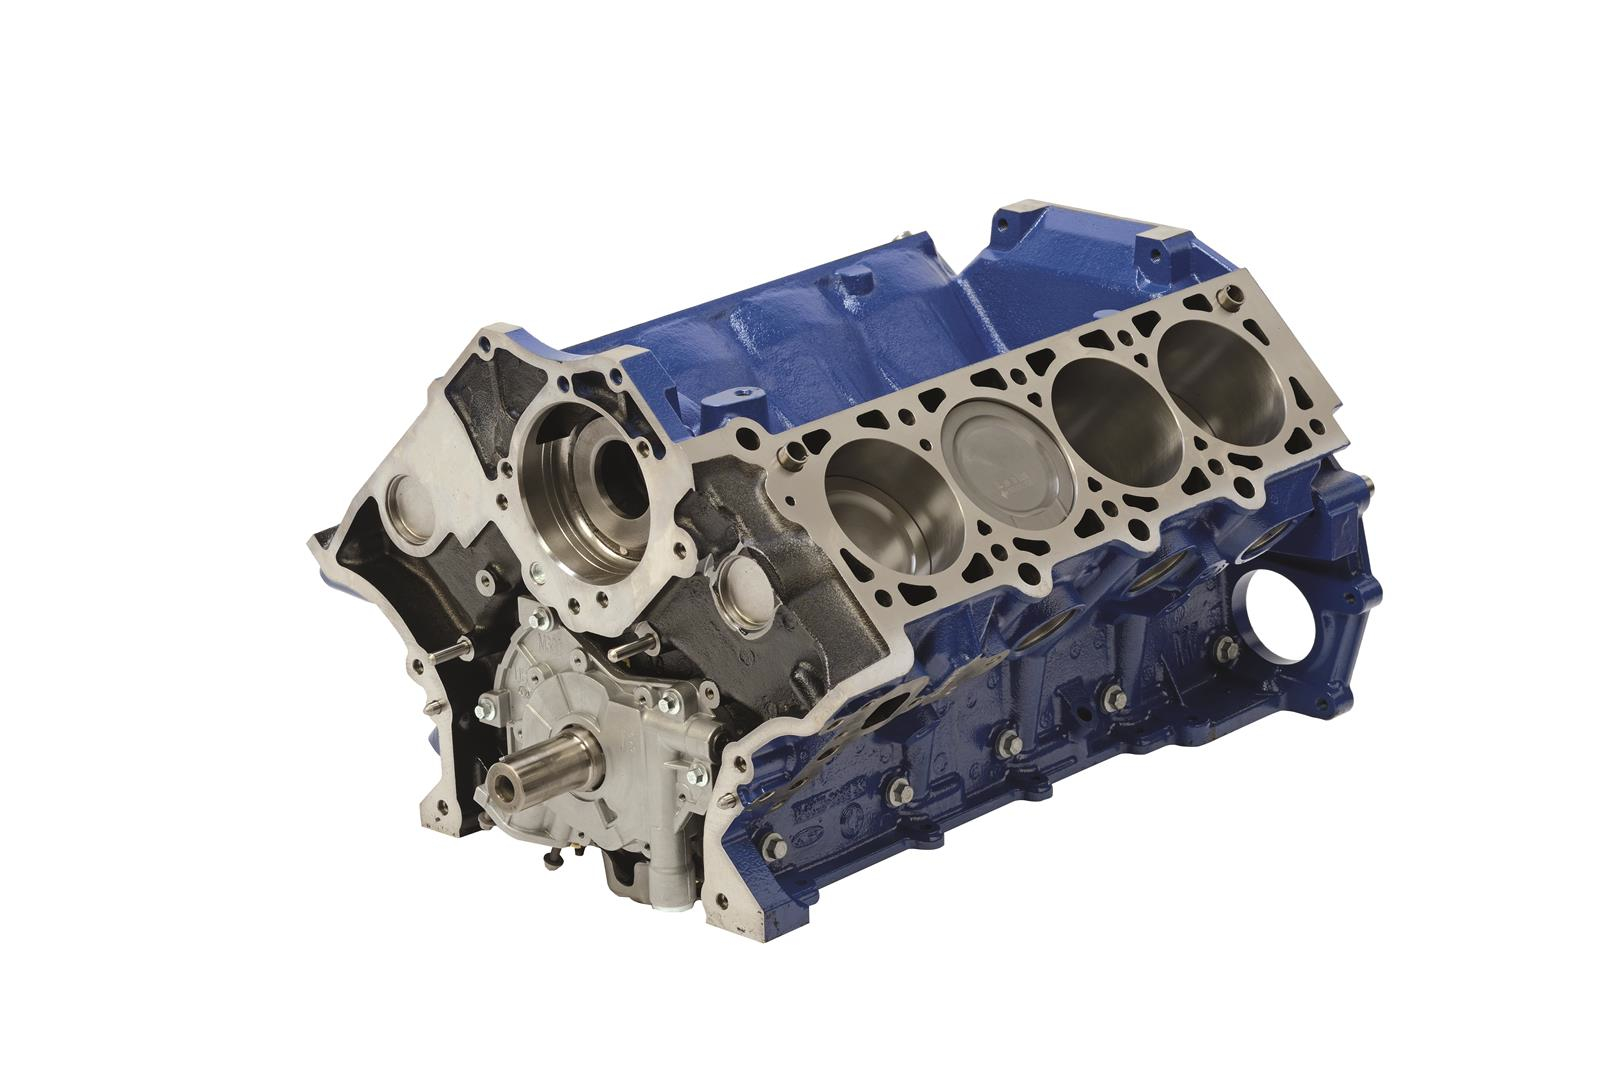 Ford Performance Parts 5.3L Modular Boss Short Block Engine